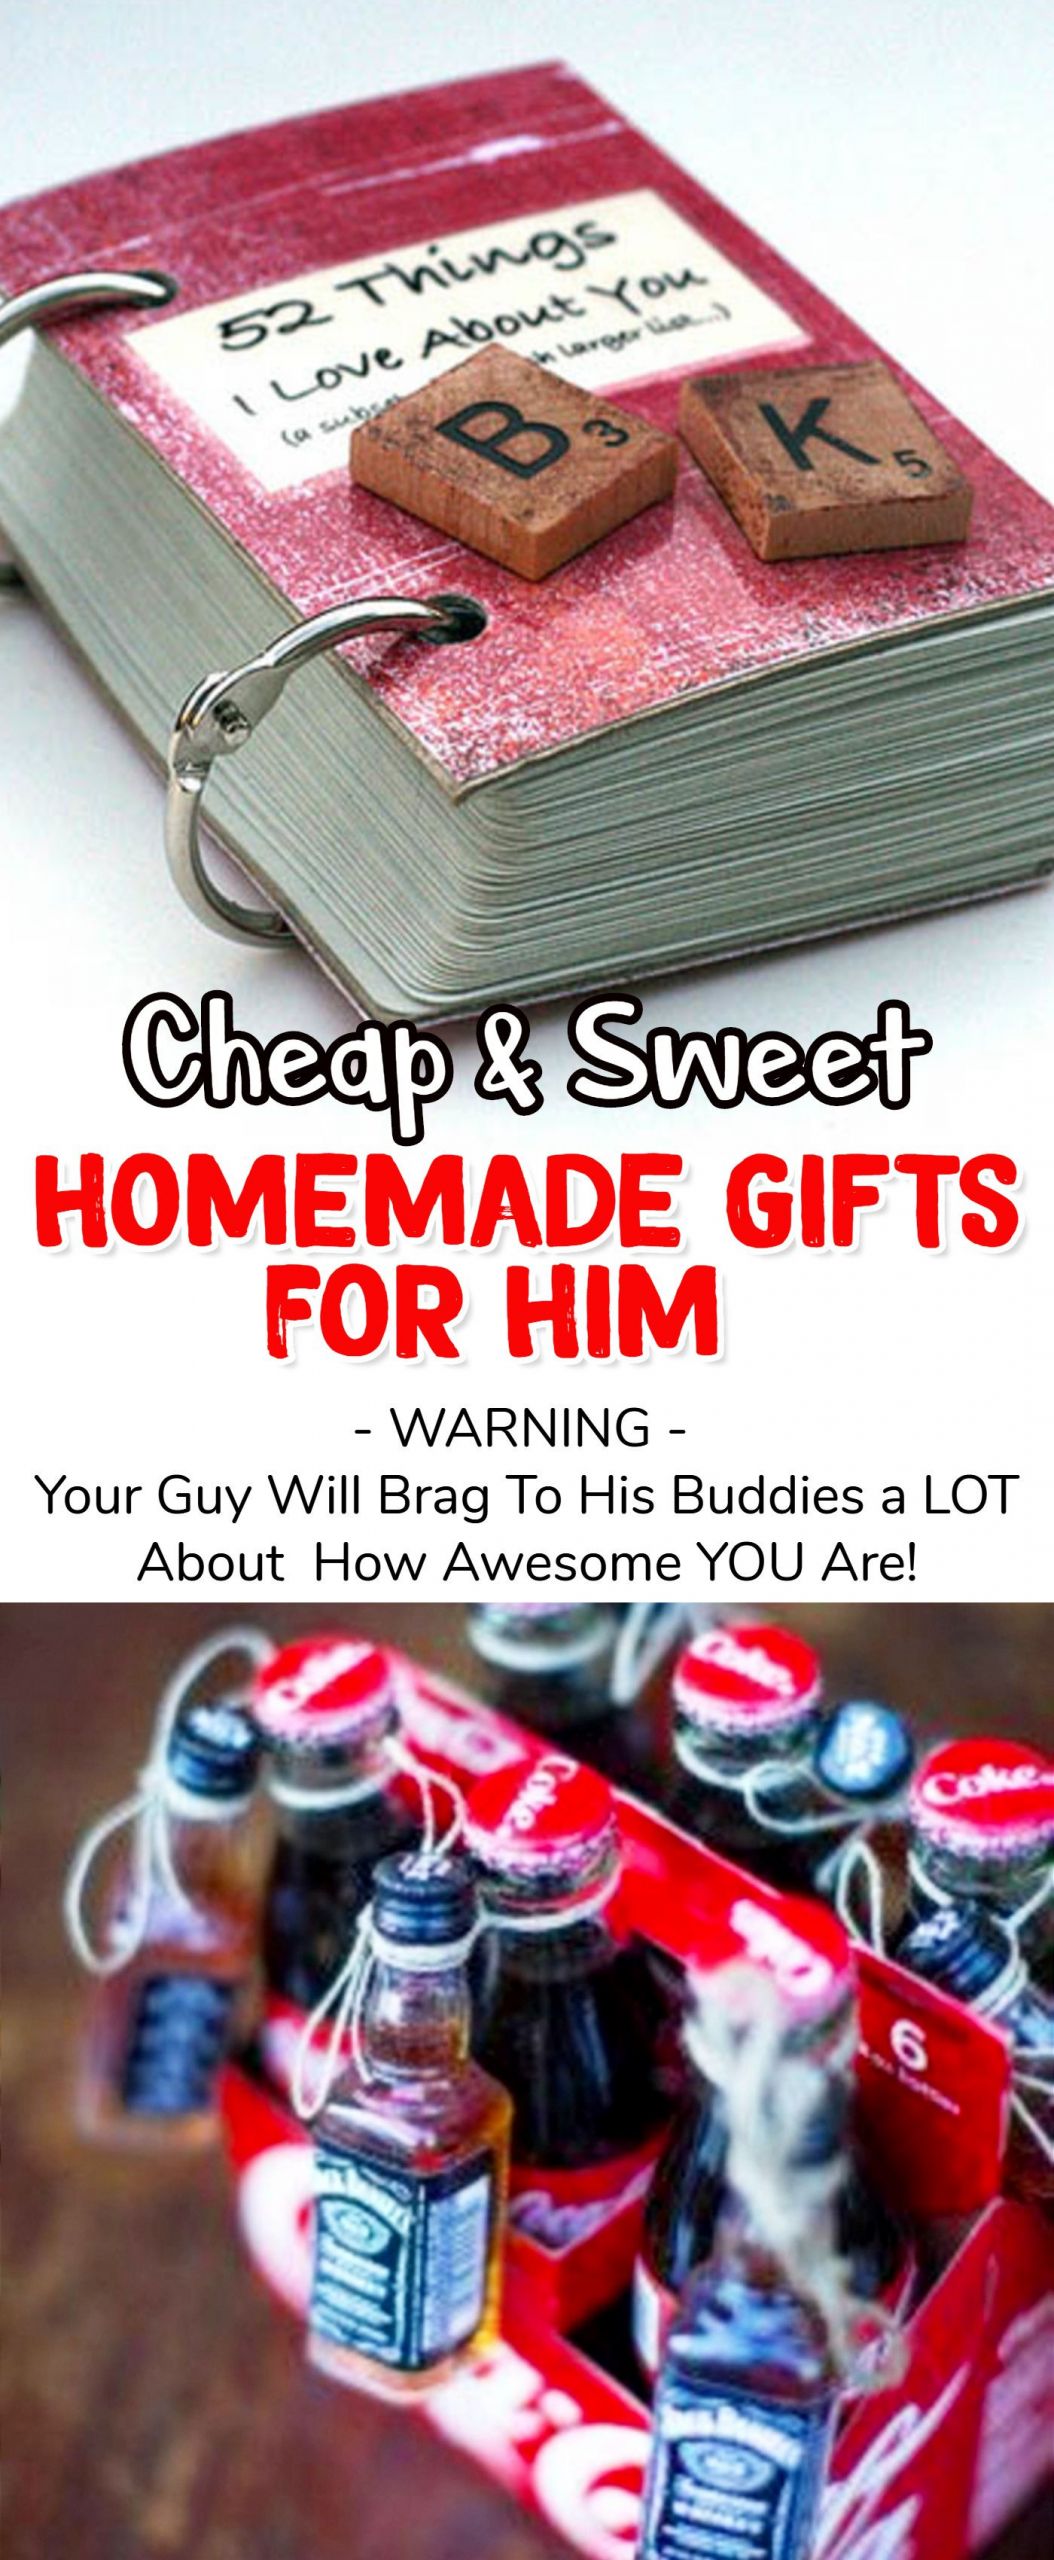 Romantic Gift Ideas For Boyfriend
 Homemade Gift Ideas For Him 26 Romantic DIY Gifts To